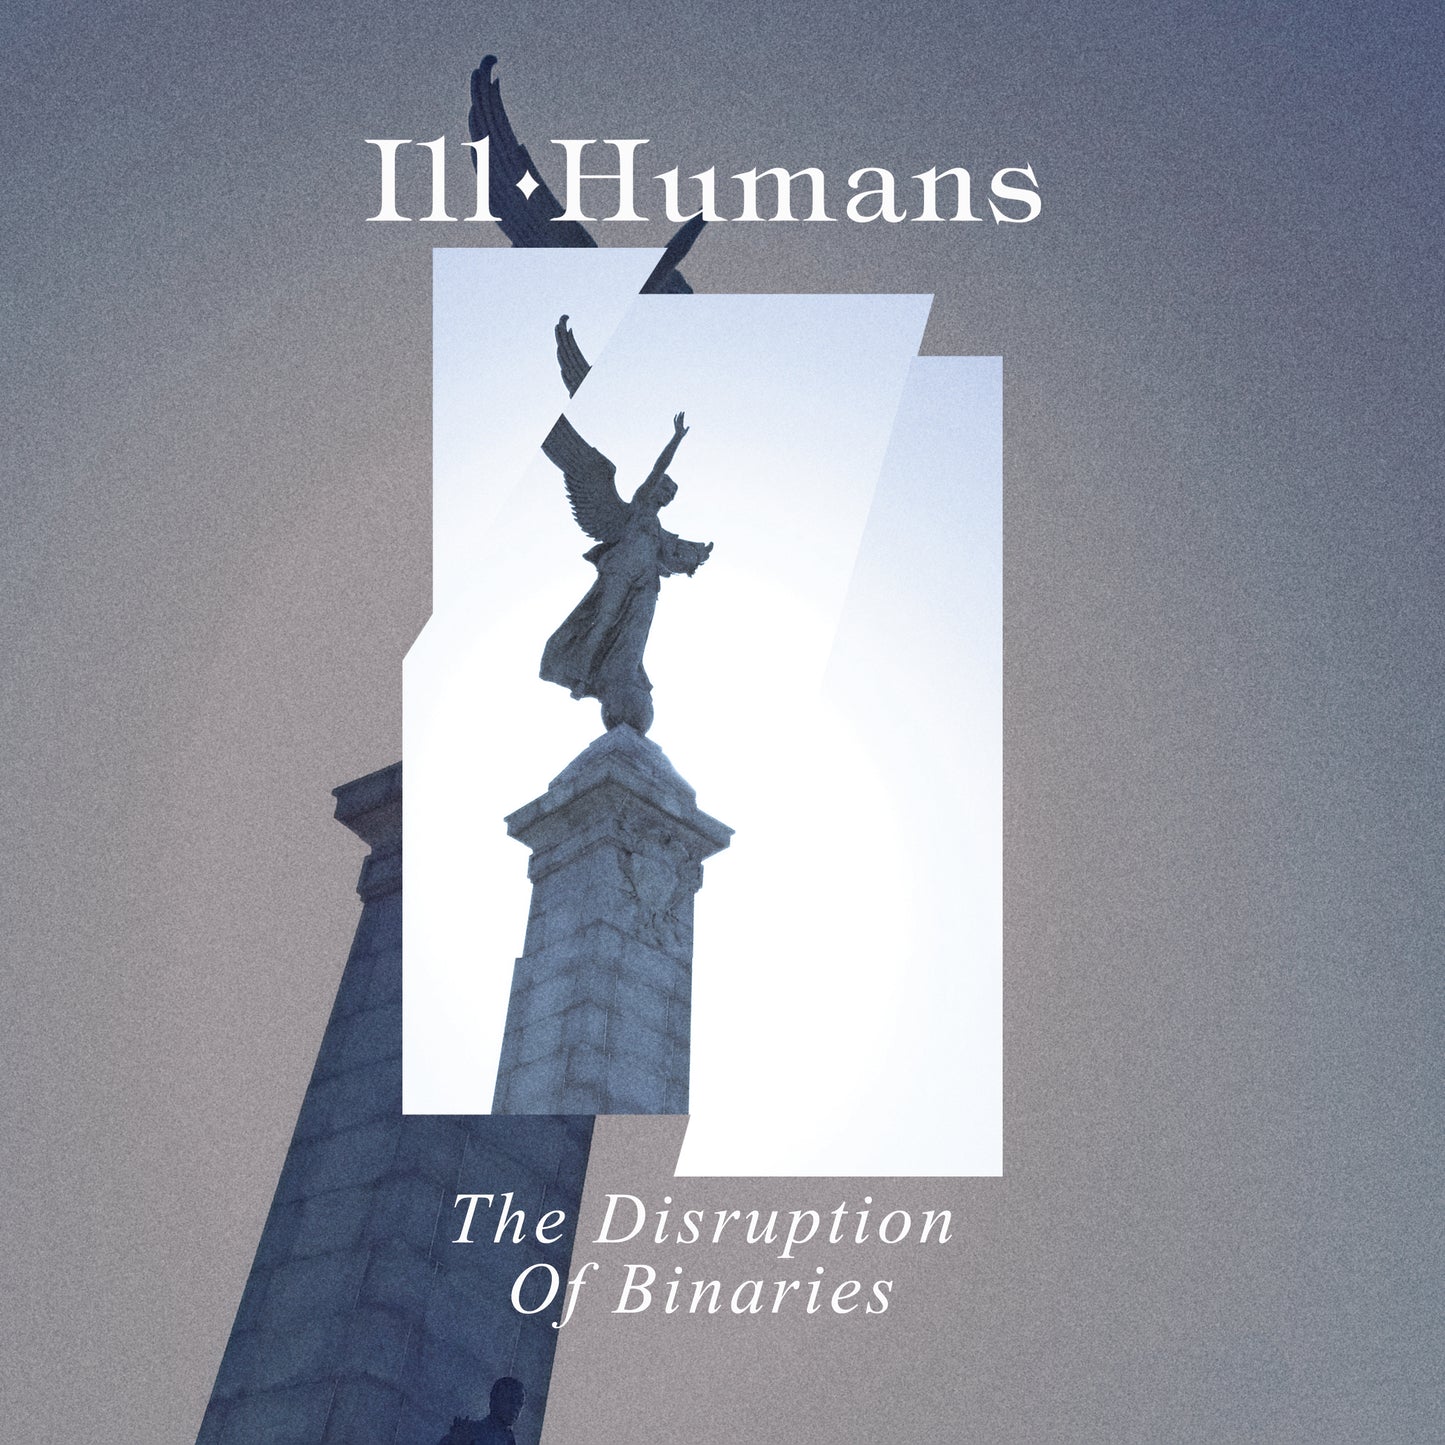 Ill Humans "The Disruption of Binaries"